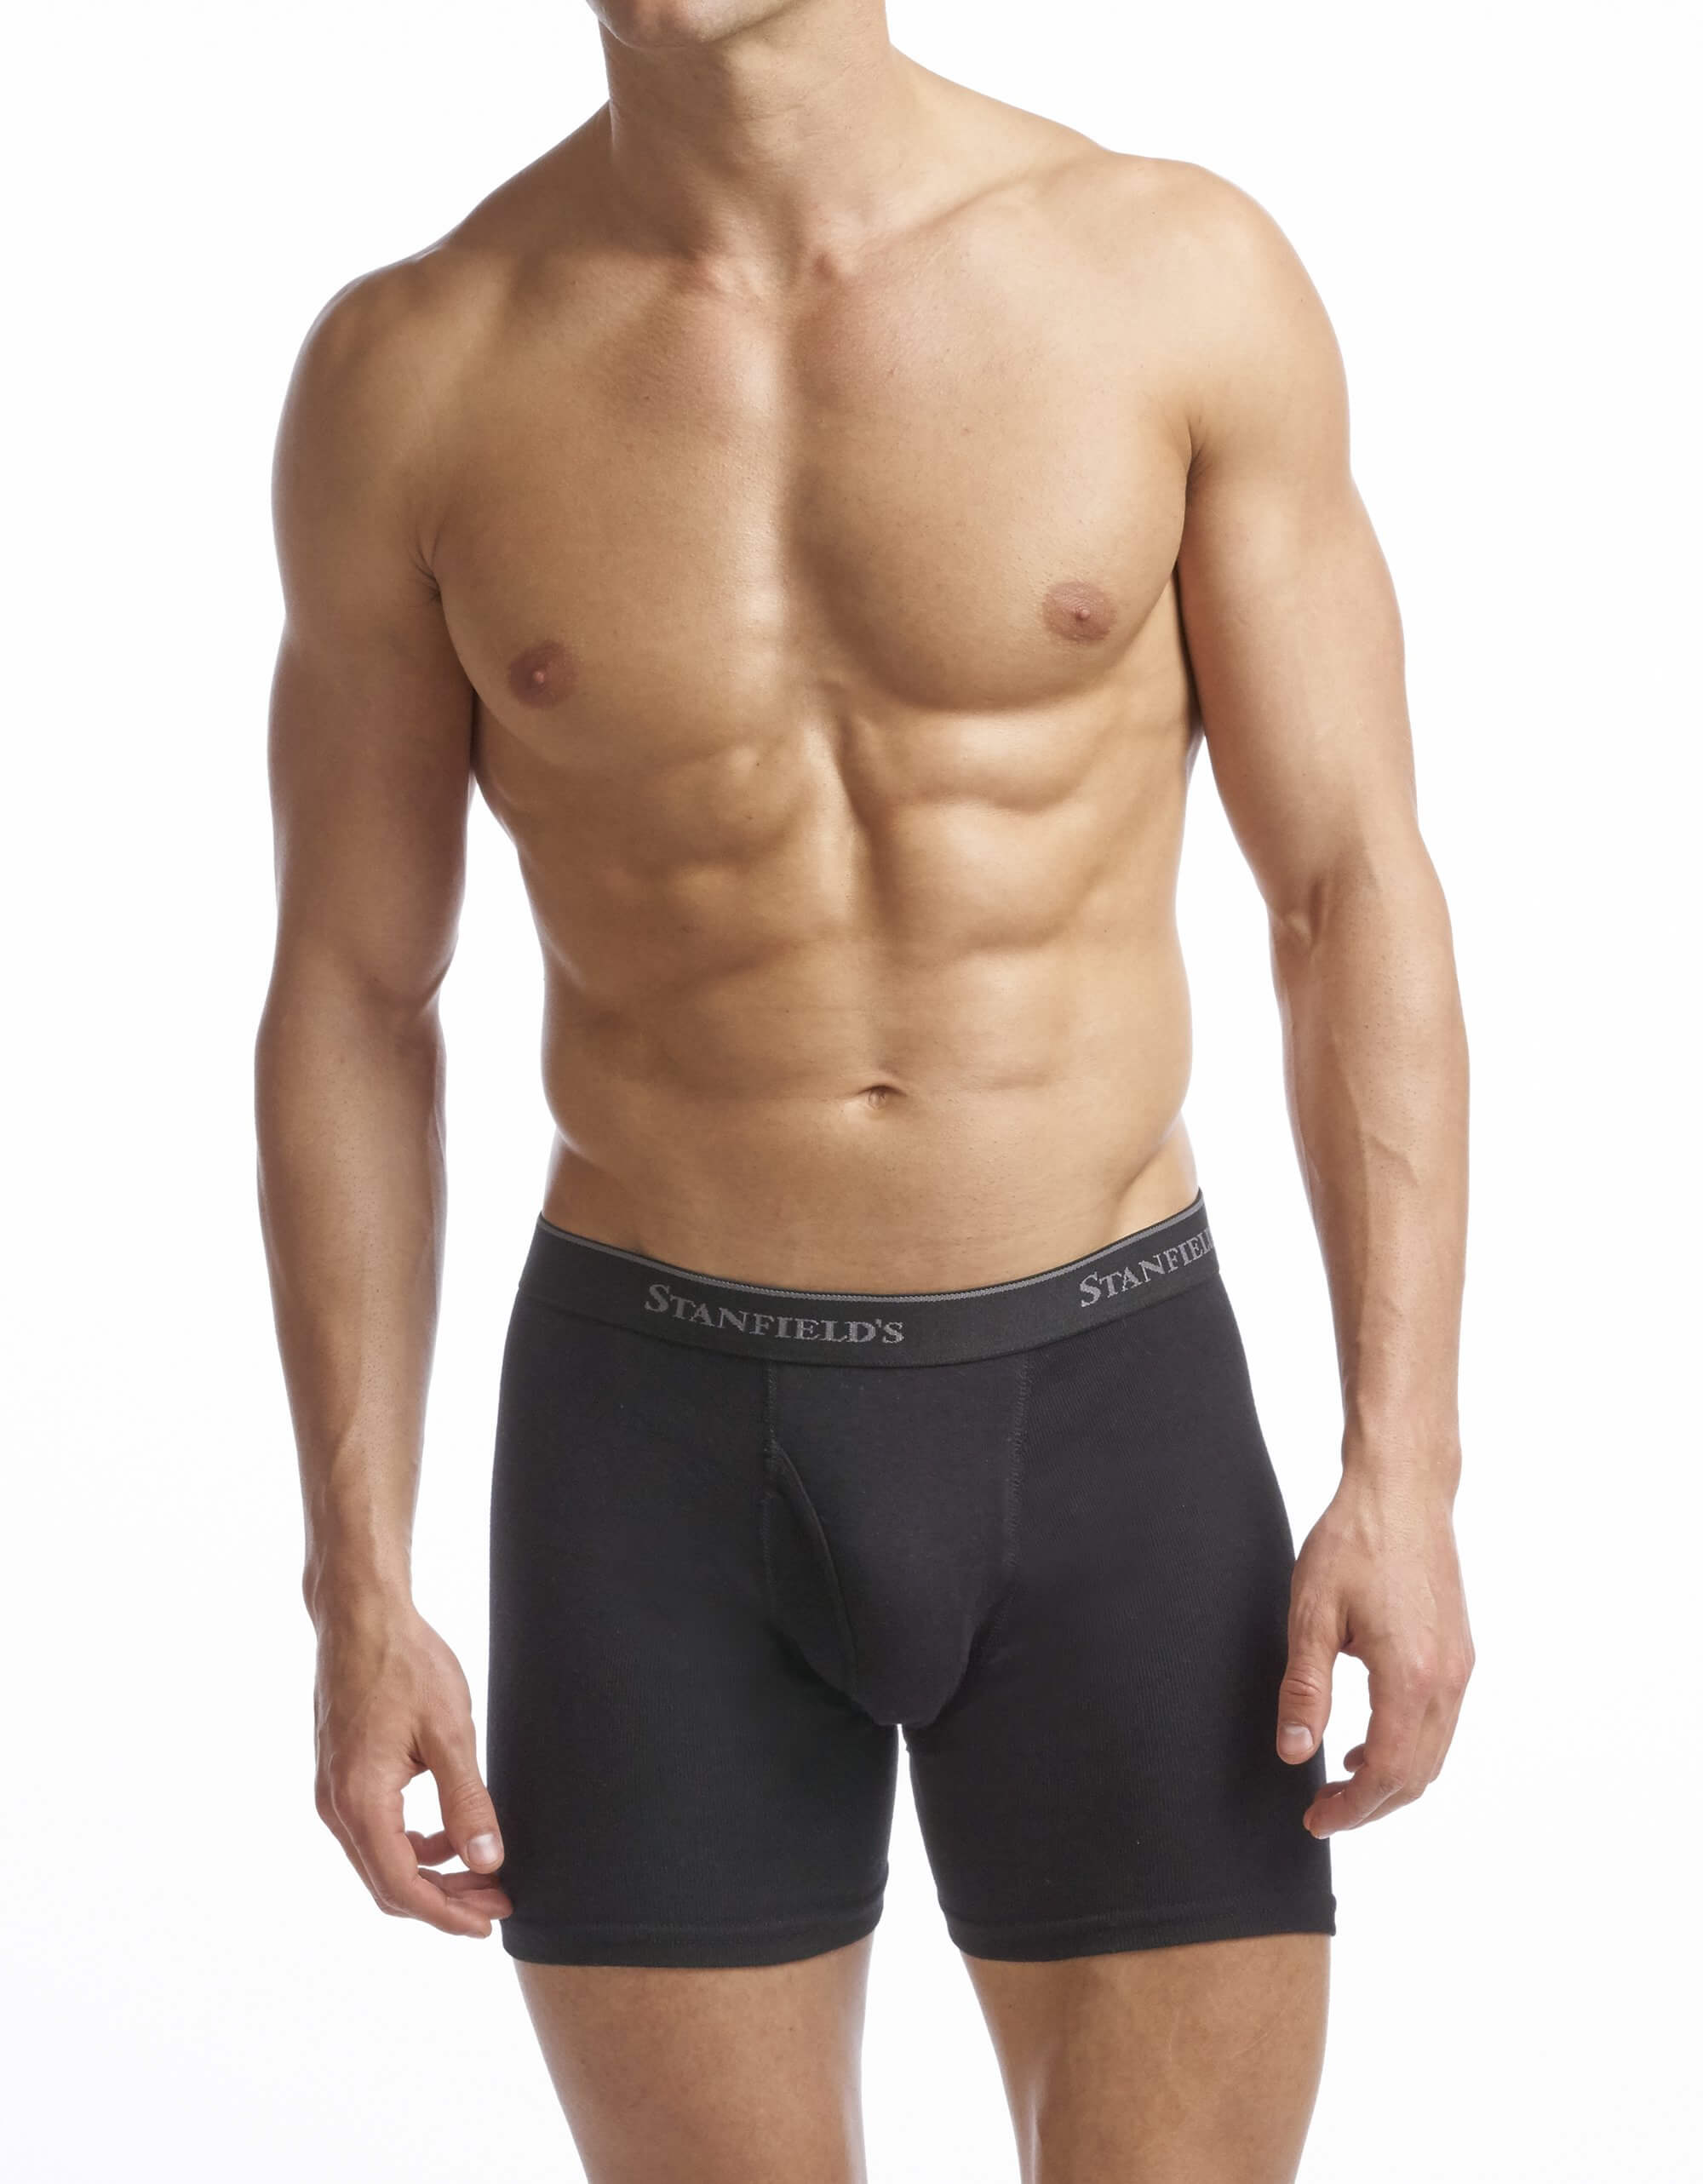 ZLYC Mens Cotton Boxer Brief Long Leg Underwear, 3/4 Pack